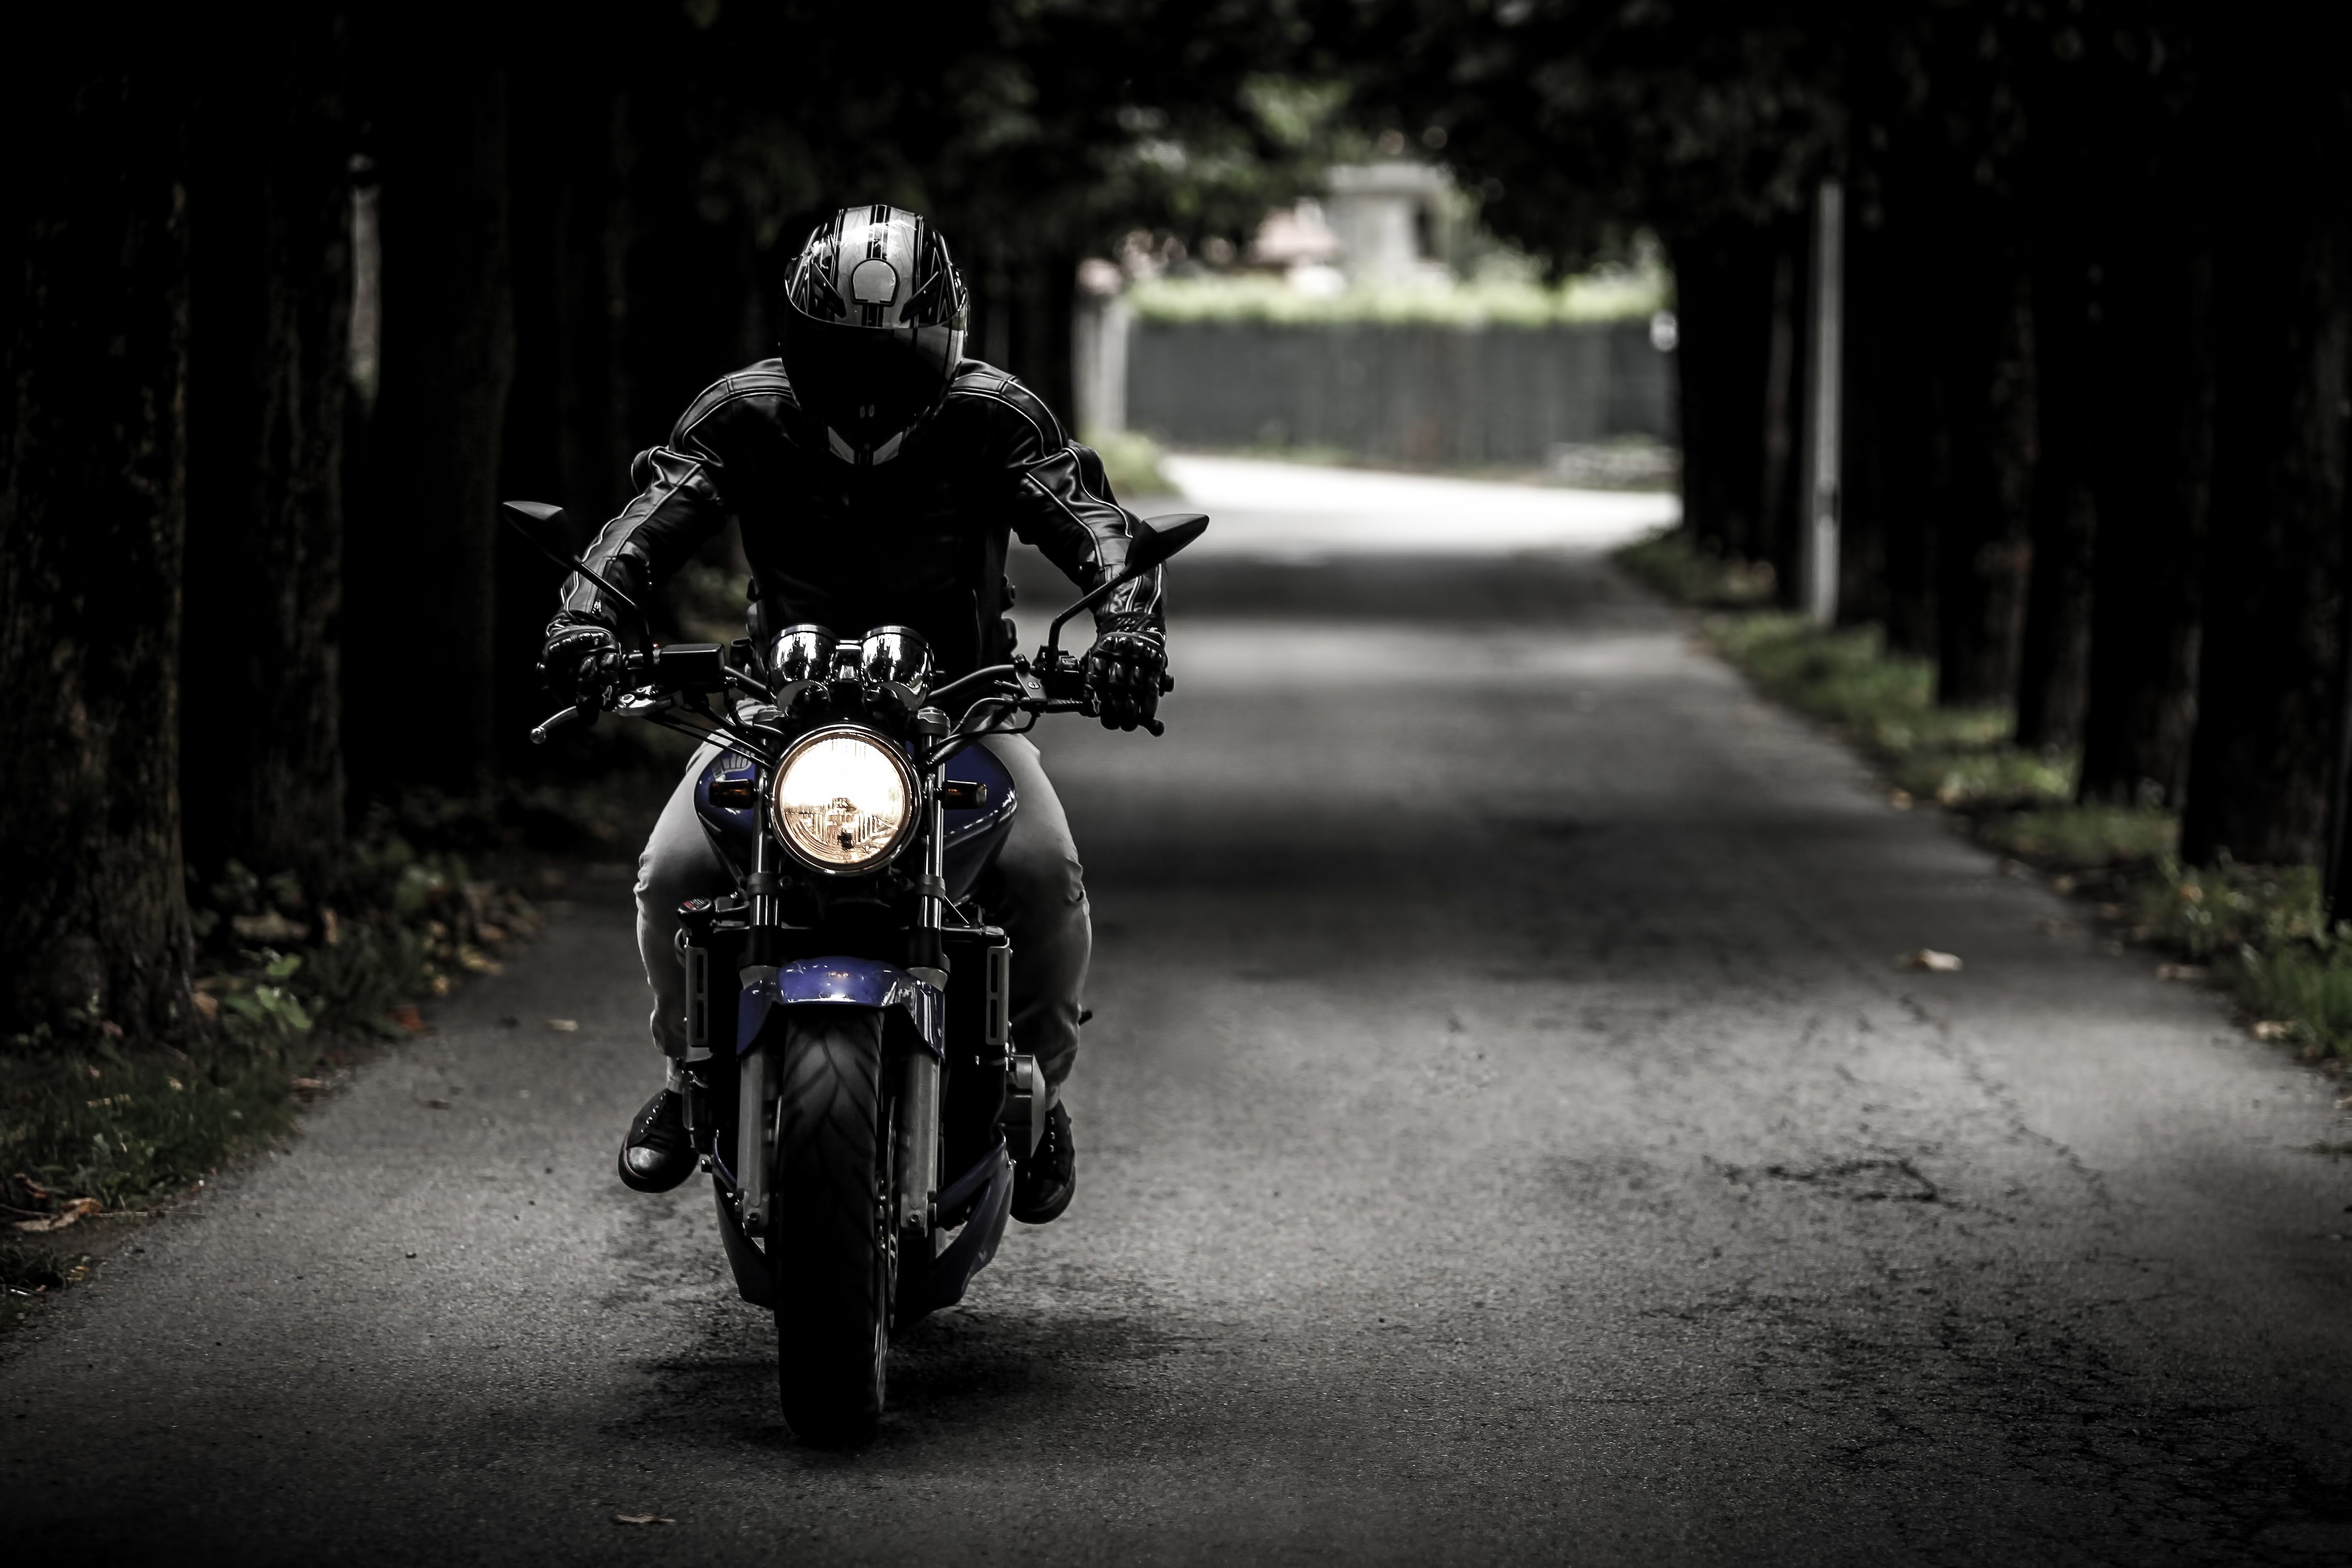 helmet, biker, motorcyclist, motorcycles, traffic, movement, motorcycle